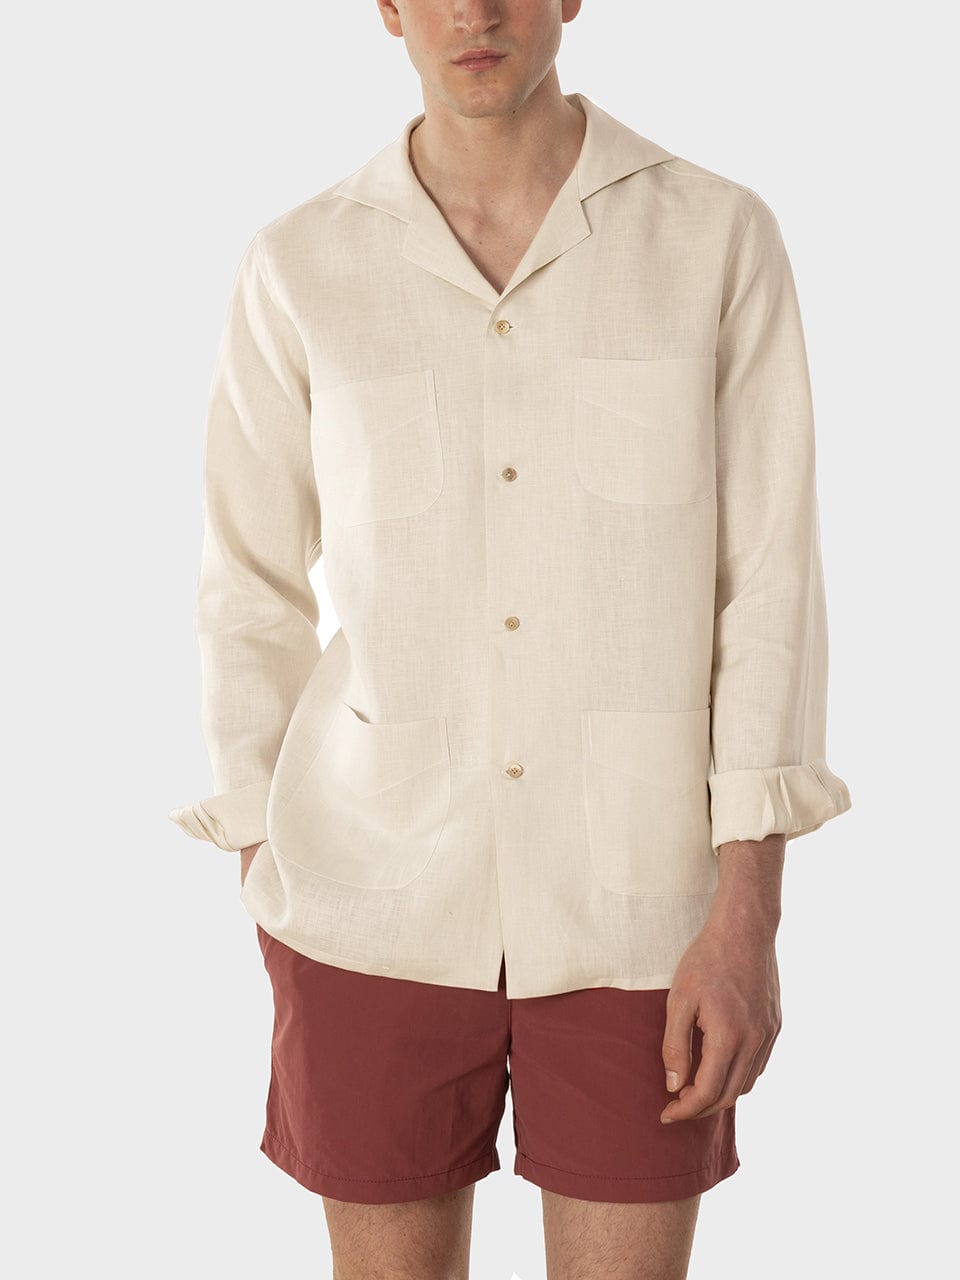 Sand Ischia Made in Italy Linen Shirt For Men - 02